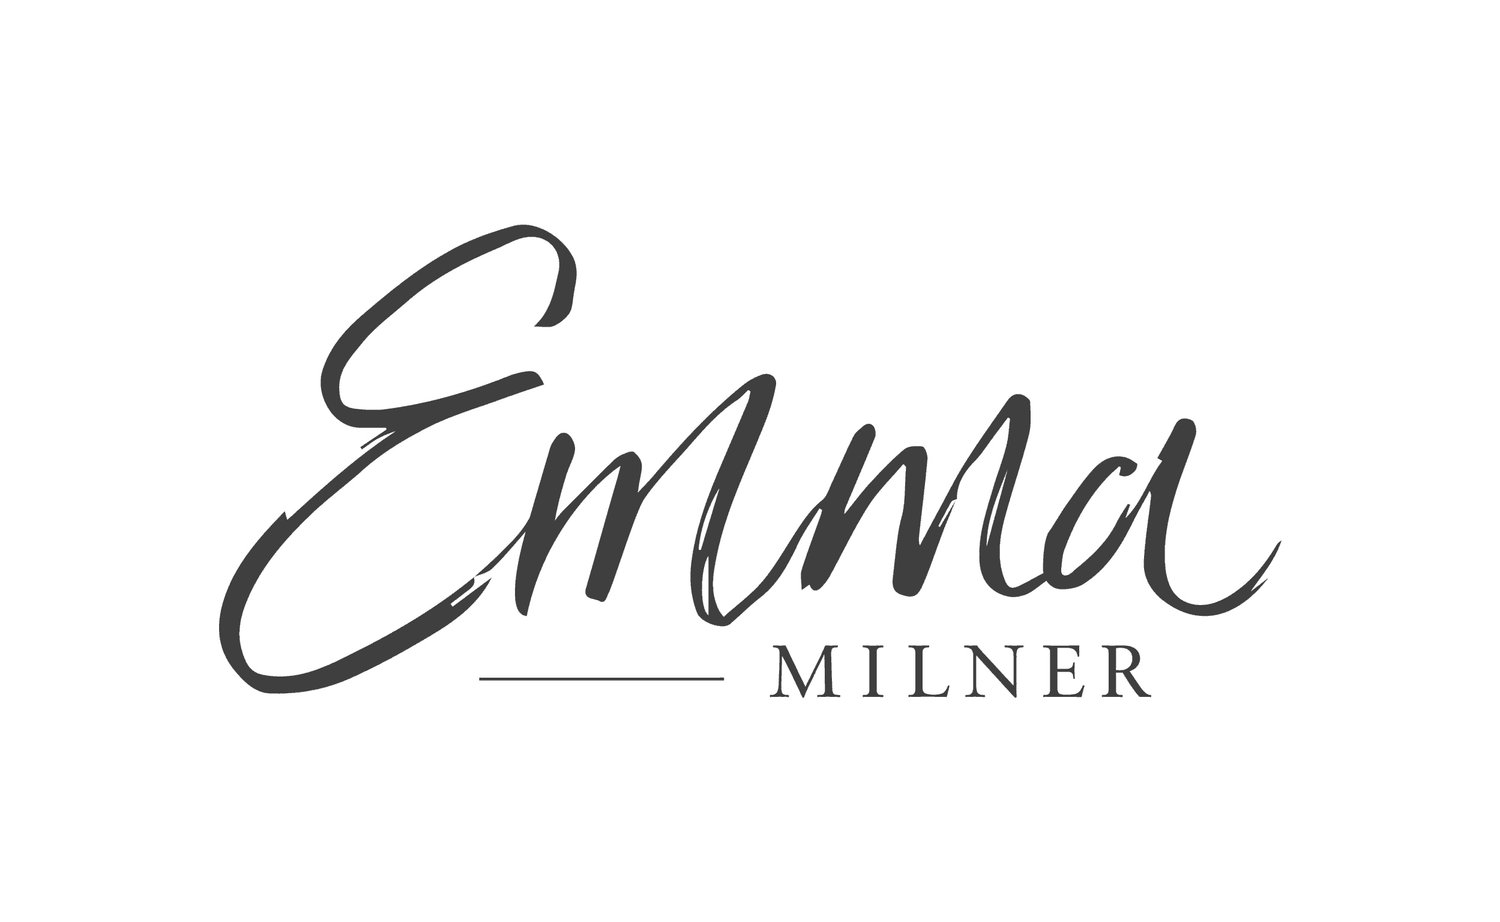 Emma Milner